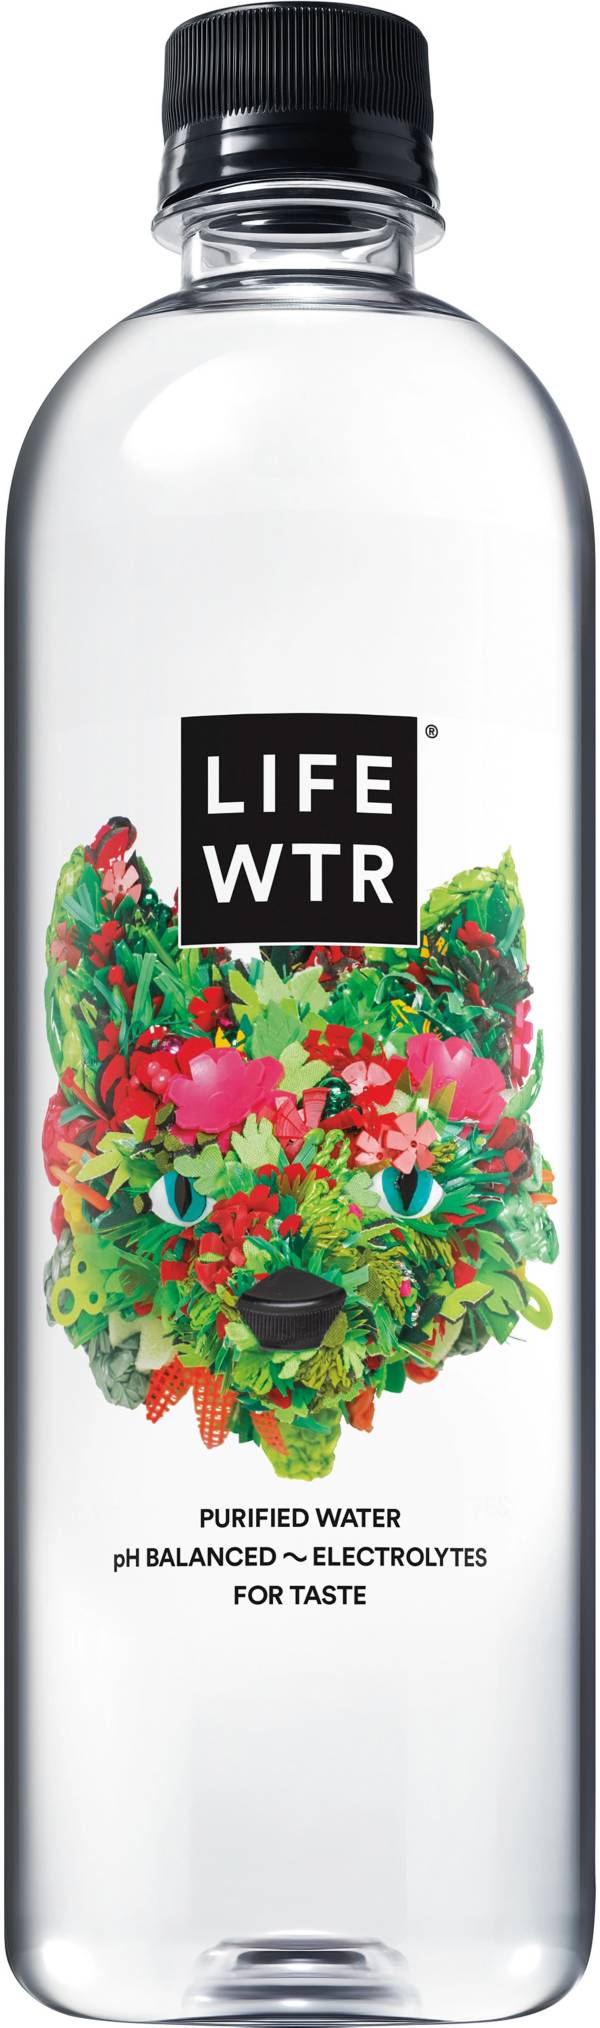 LIFEWTR Purified Water – 20 oz. product image